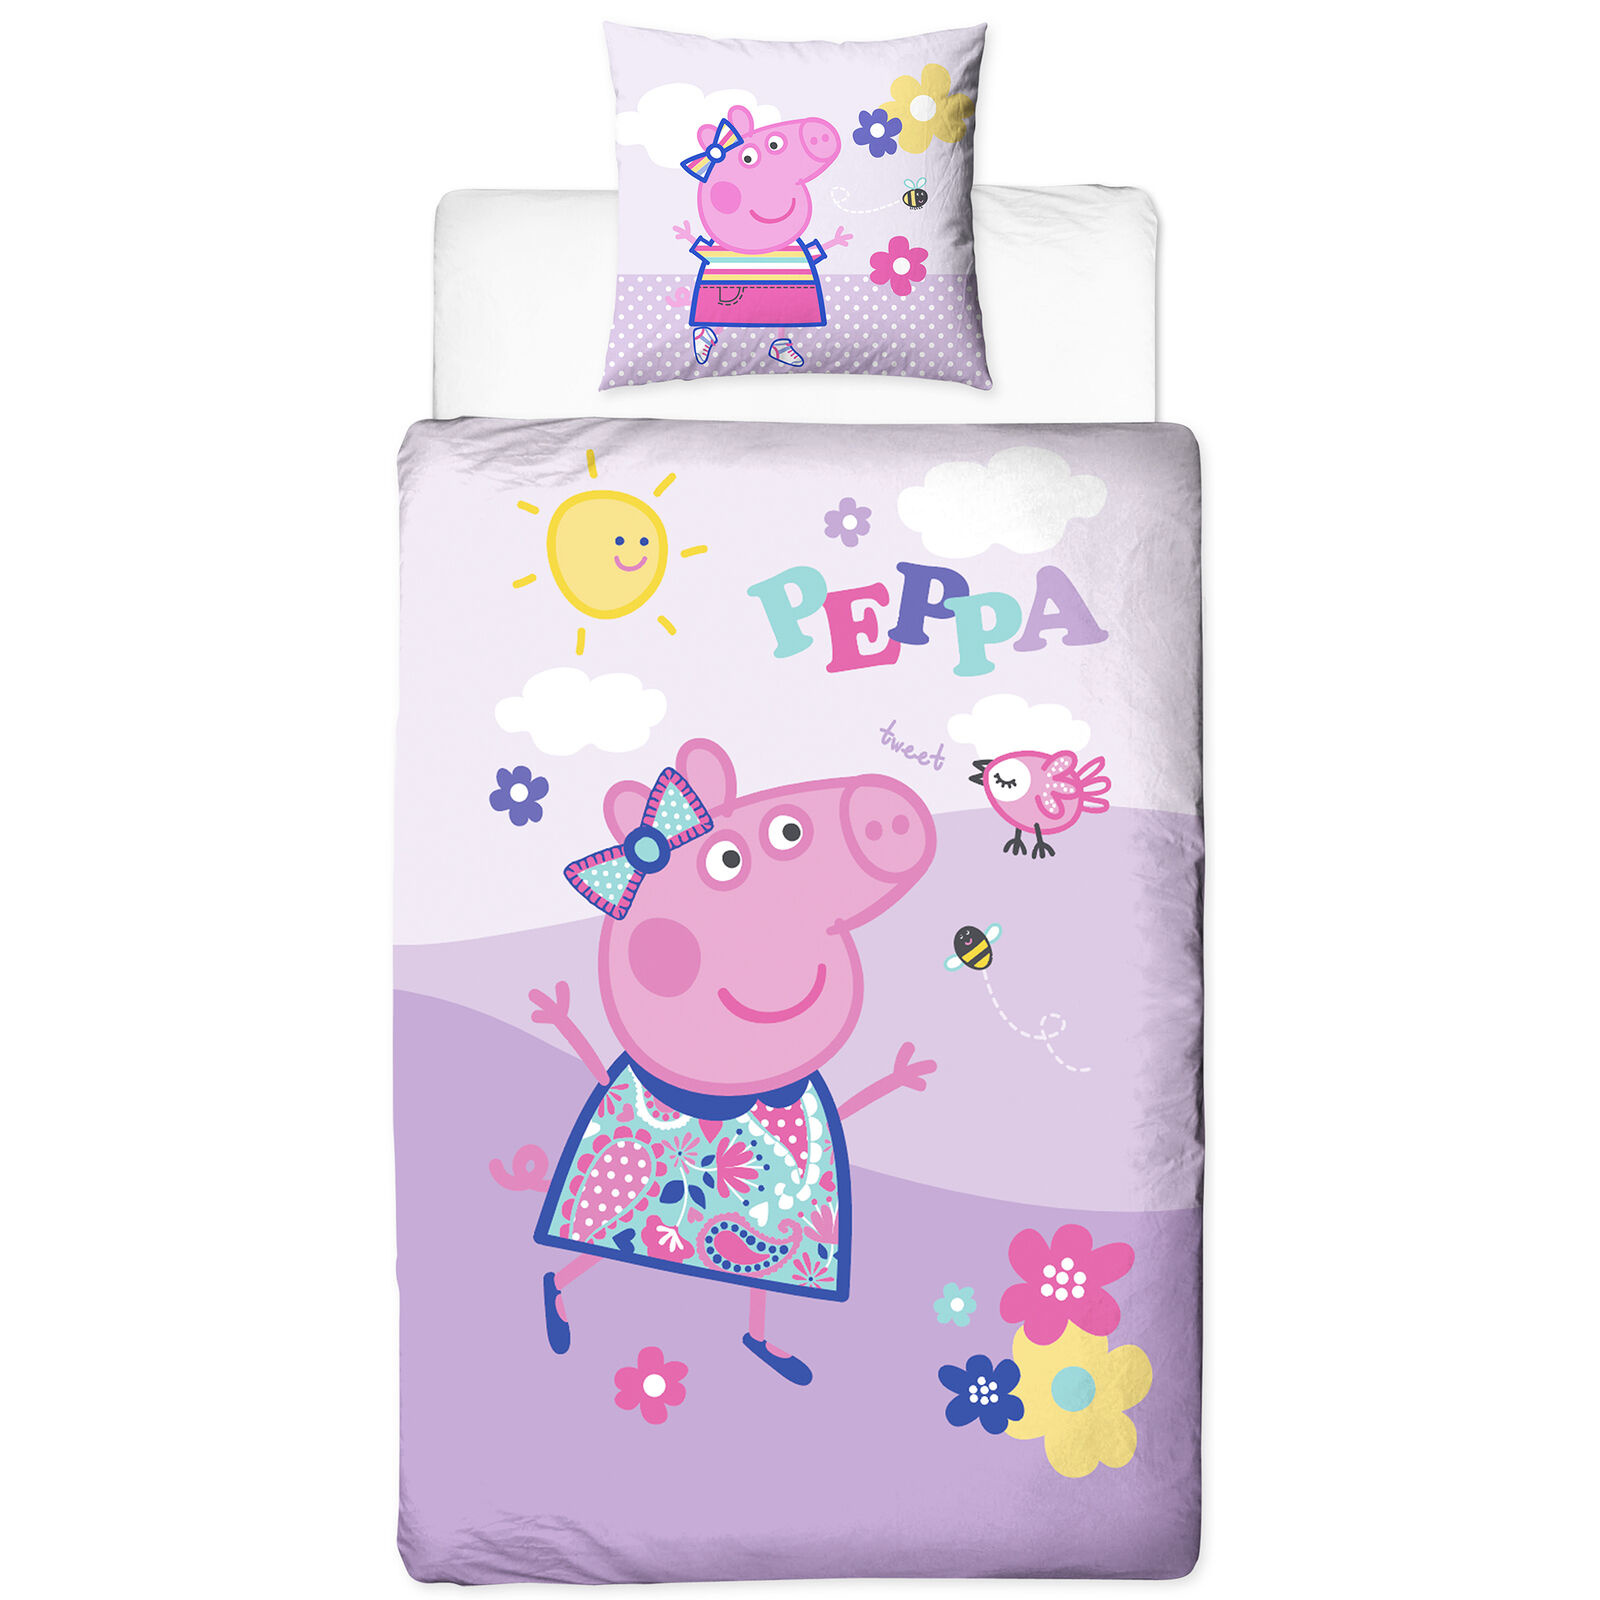 Peppa Pig Duvet Cover Set Chirpy Copy